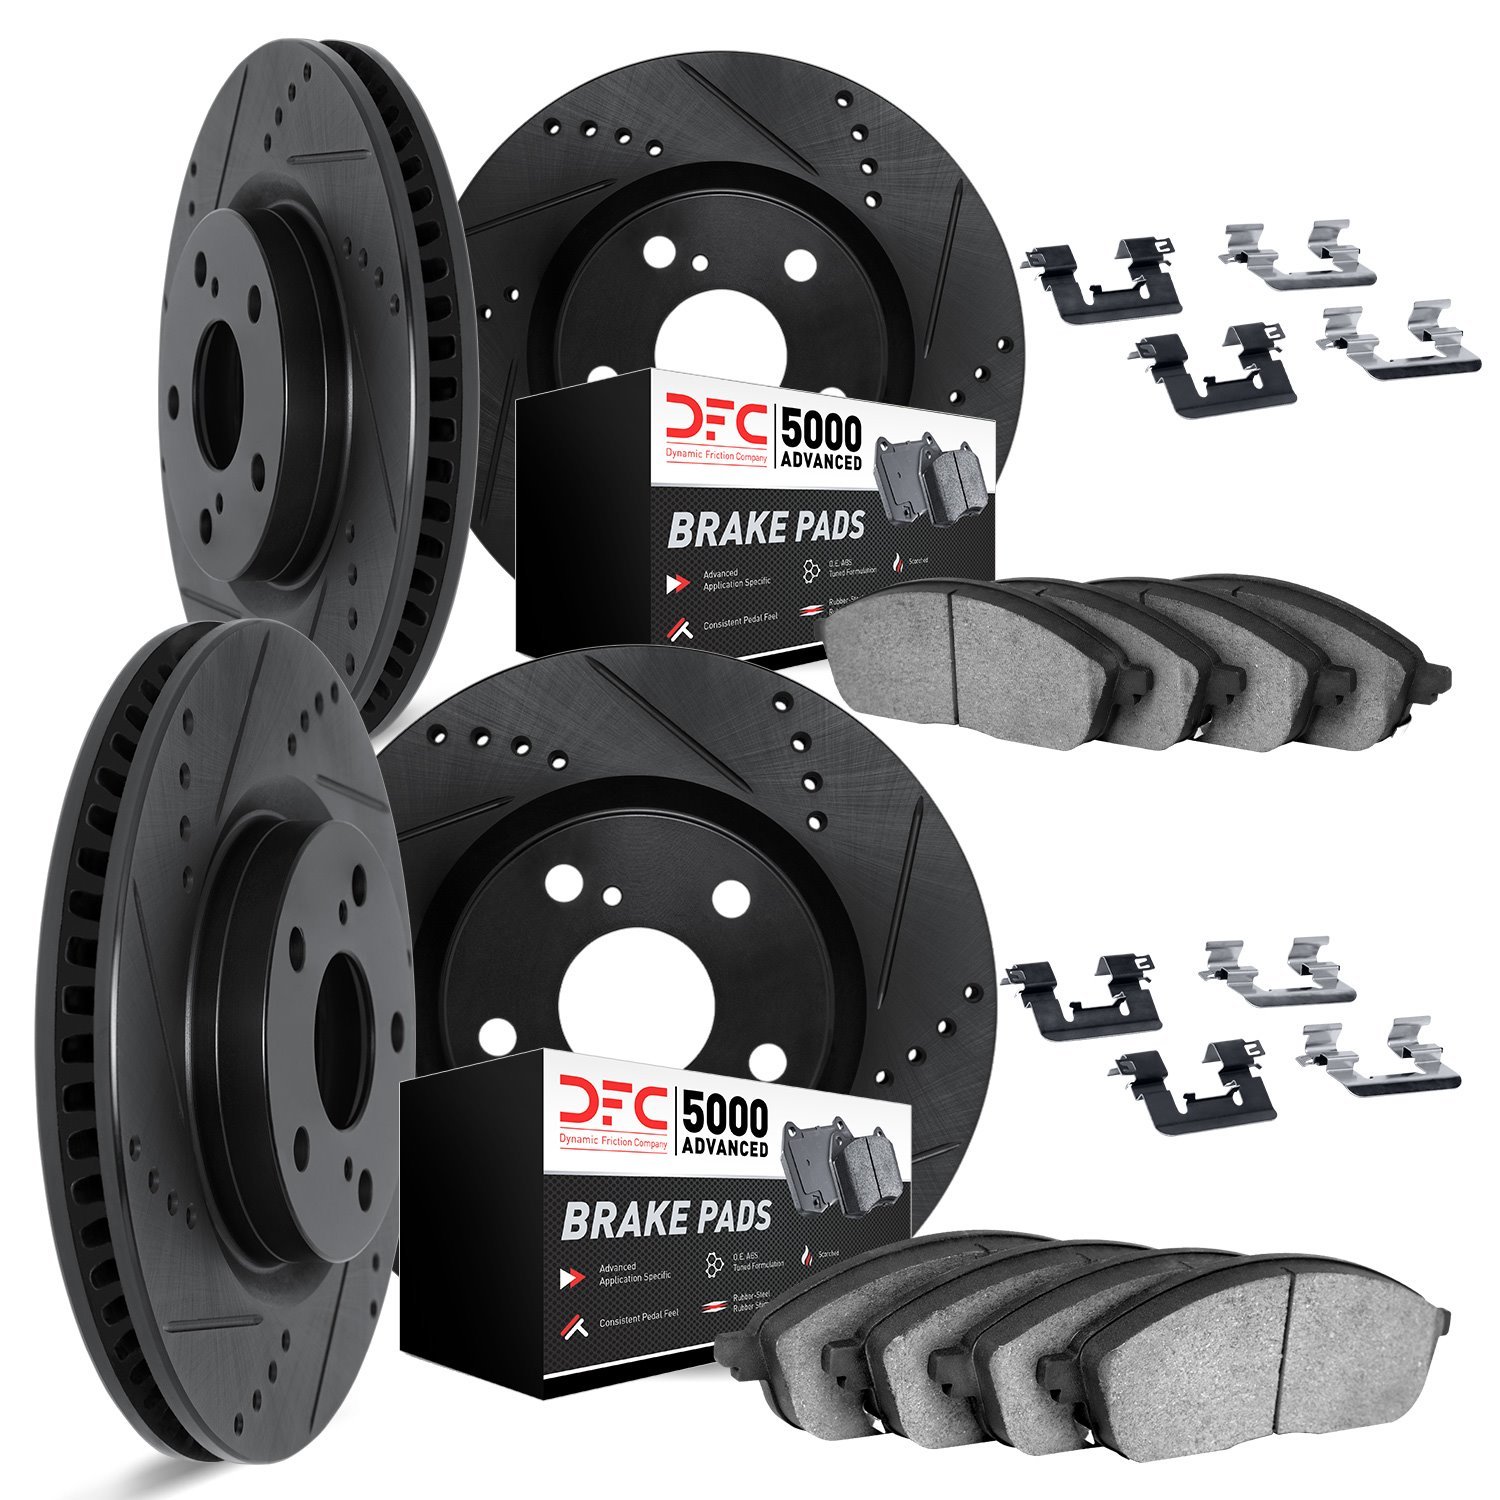 8514-68001 Drilled/Slotted Brake Rotors w/5000 Advanced Brake Pads Kit & Hardware [Black], 1997-2001 Infiniti/Nissan, Position: